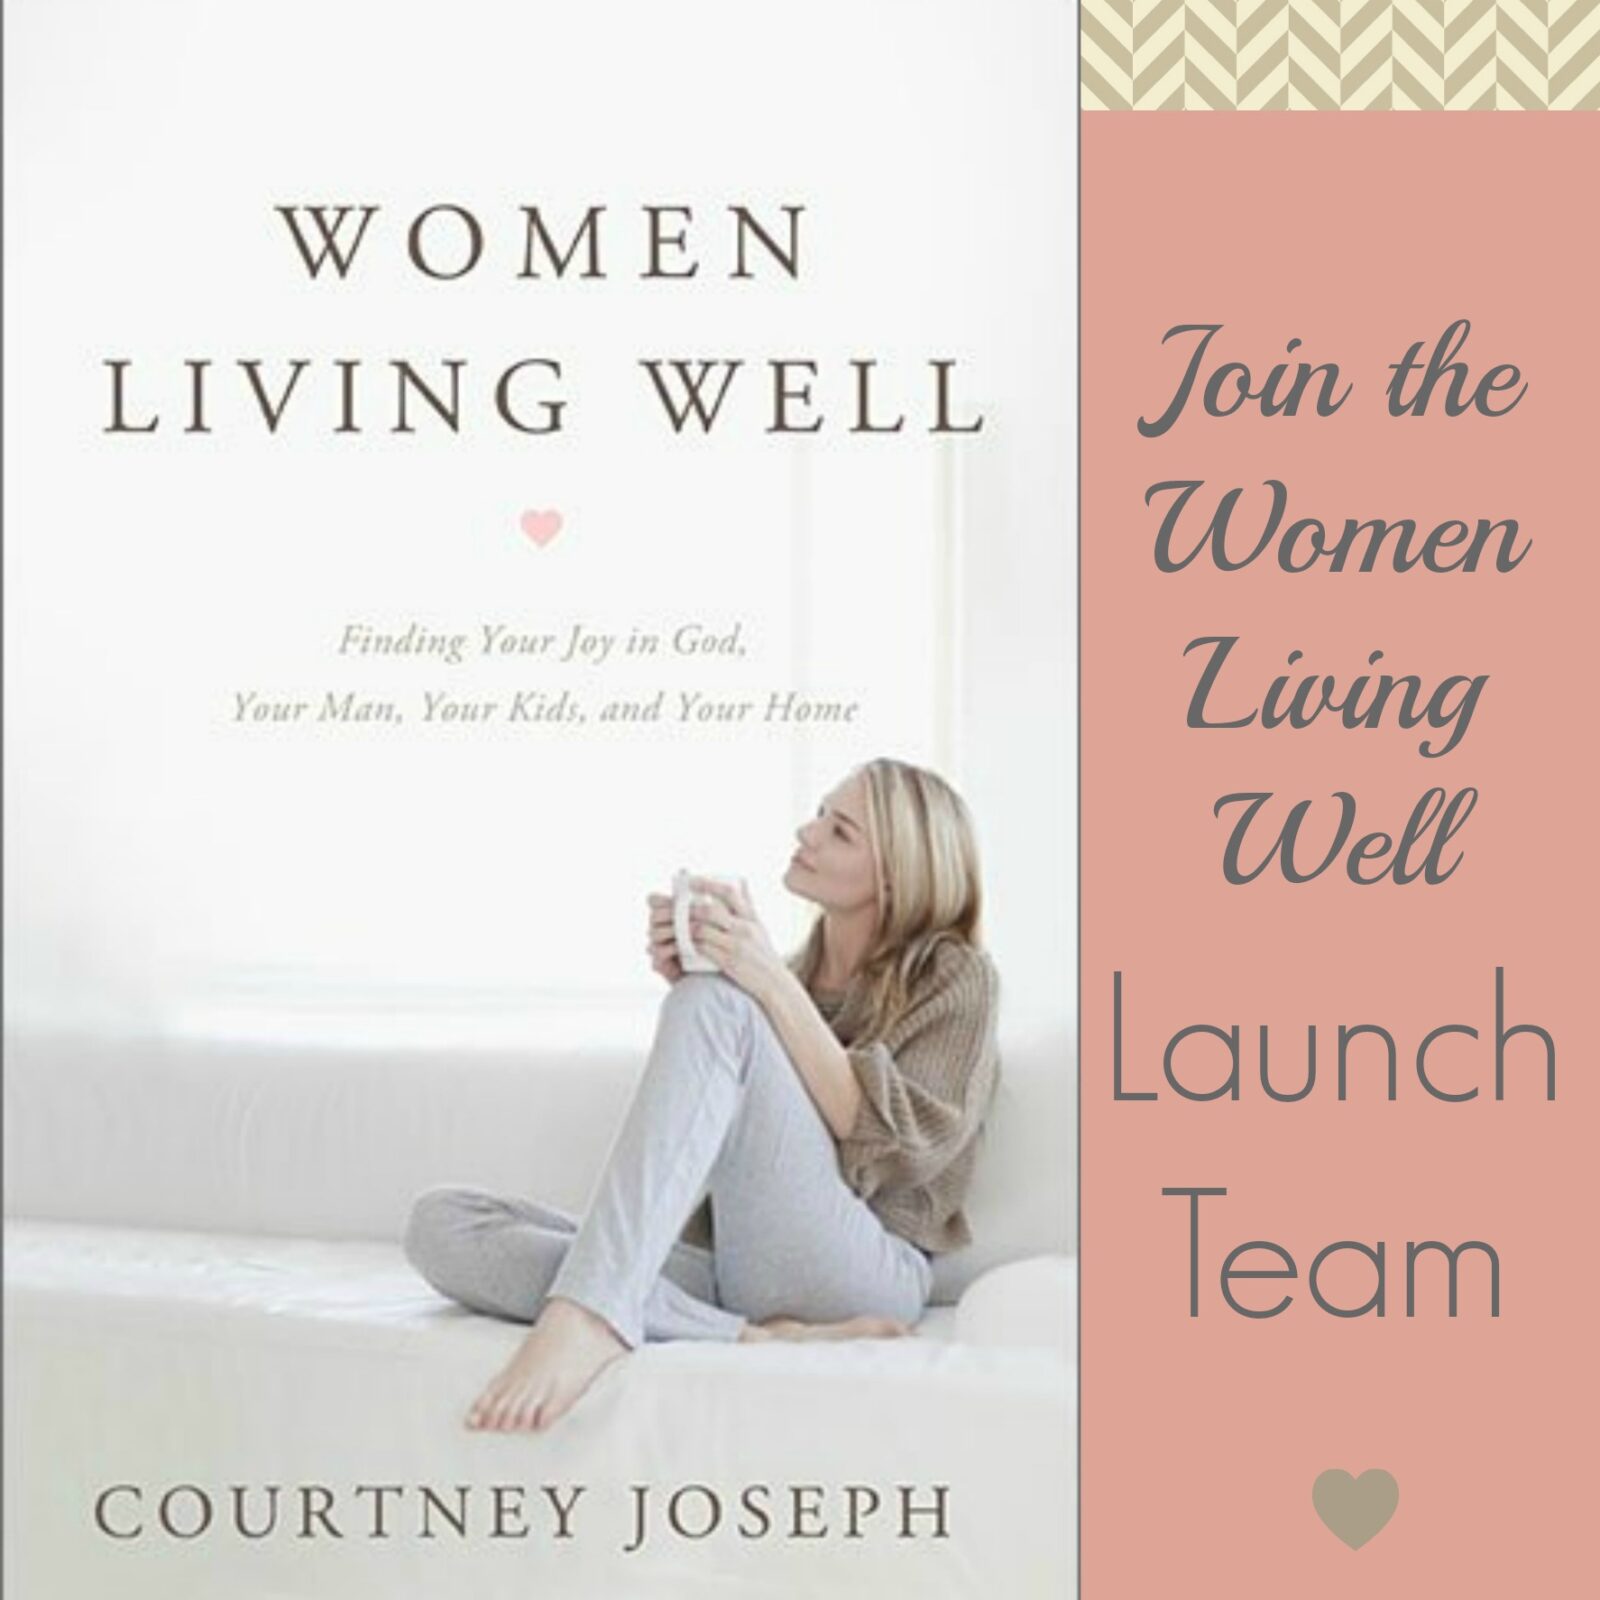 Join the “Women Living Well” Book Launch Team!